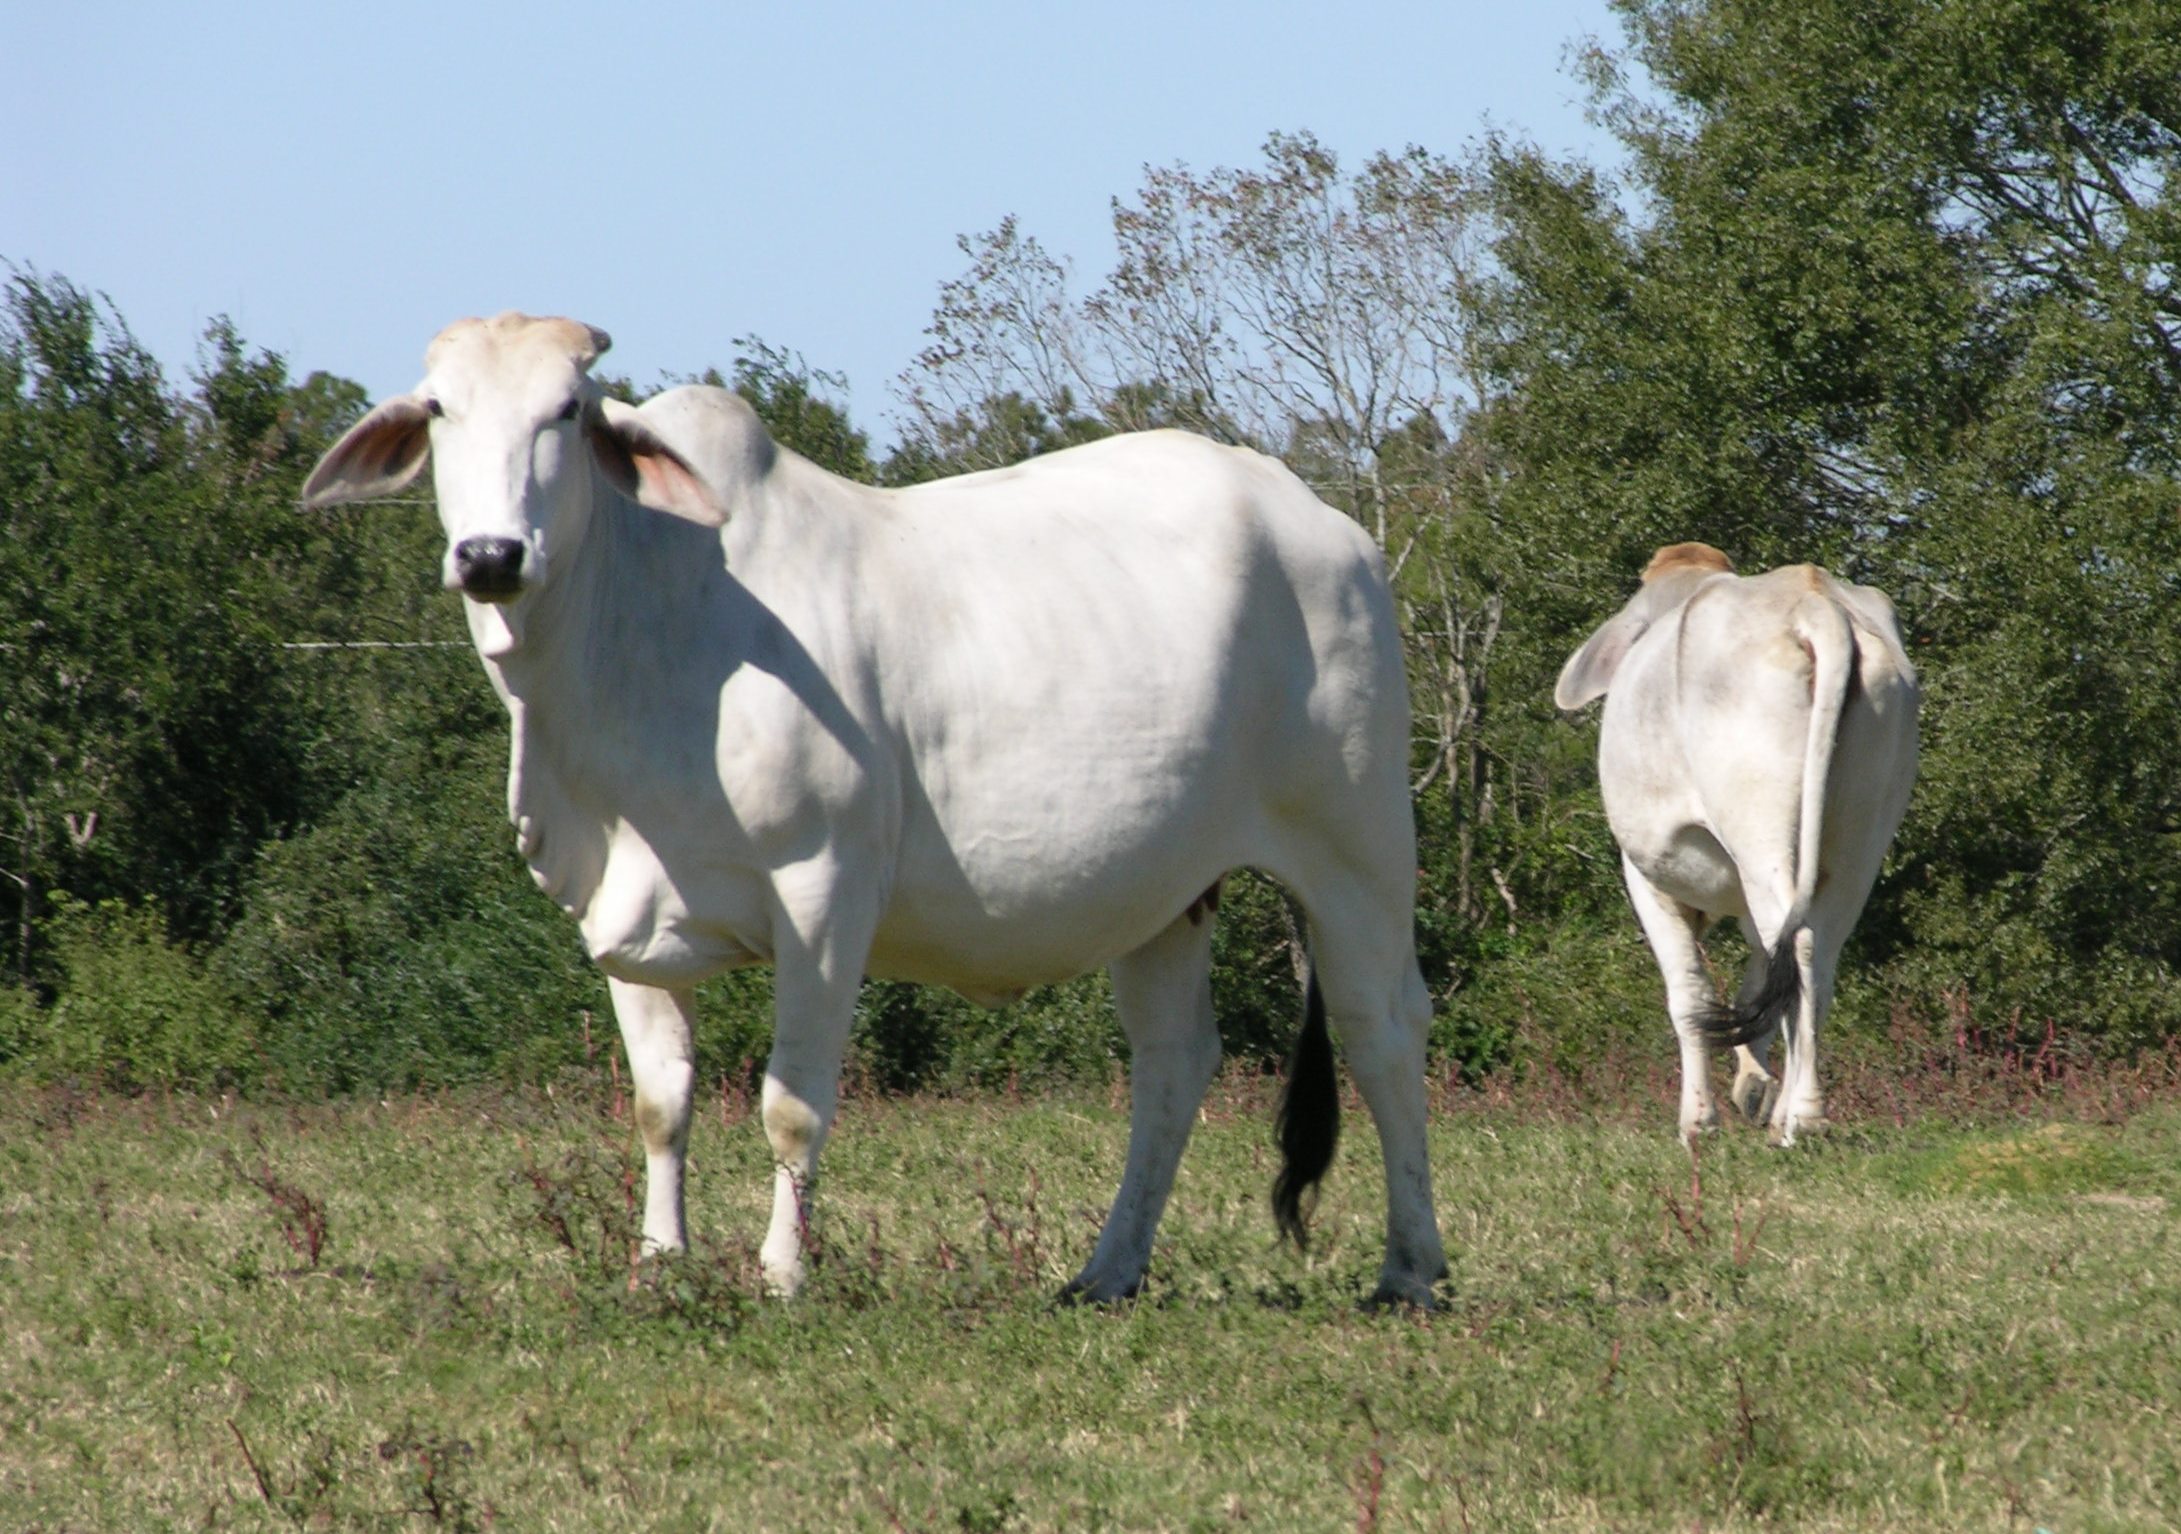 Decade-long project improves characteristics of Brahman cattle - LSU AgCenter